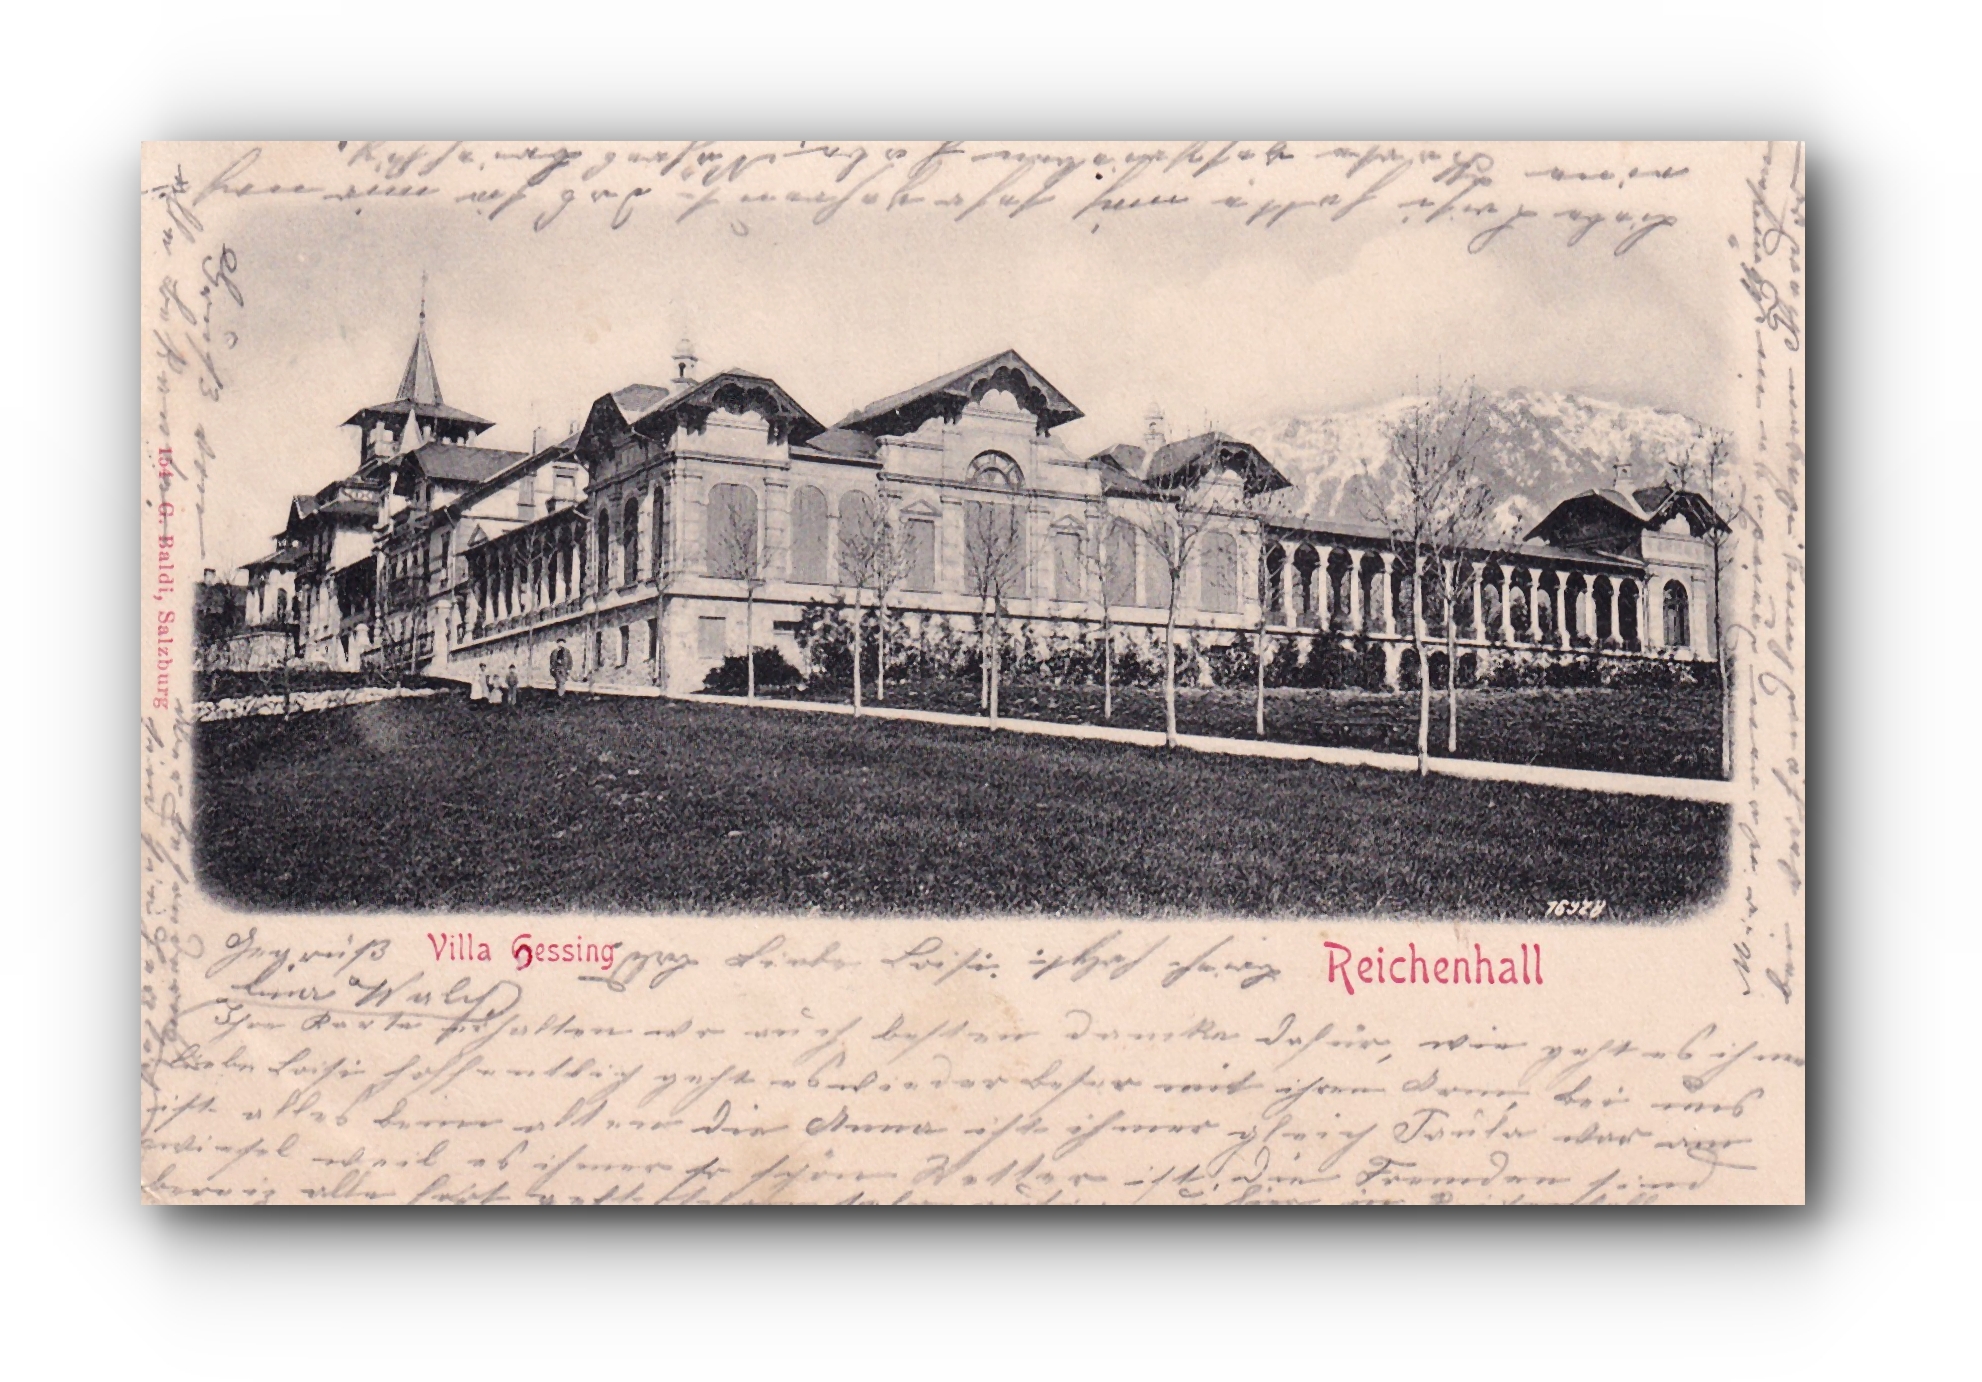 - Villa Hessing - REICHENHALL -02.10.1901 -